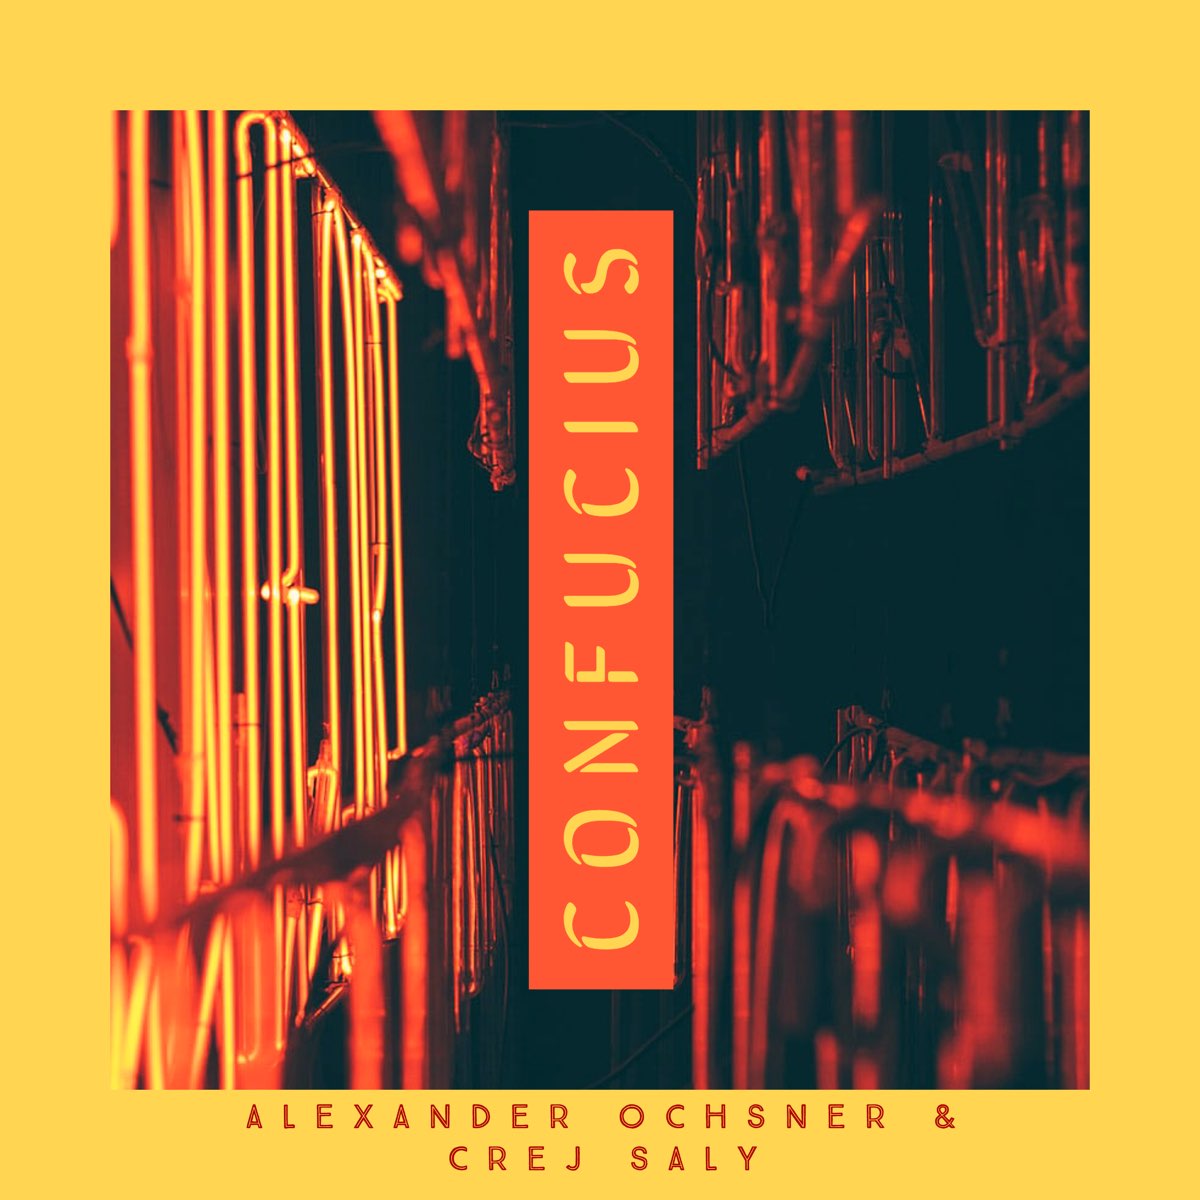 Confucius - Single by Alexander Ochsner & Crej Saly on Apple Music